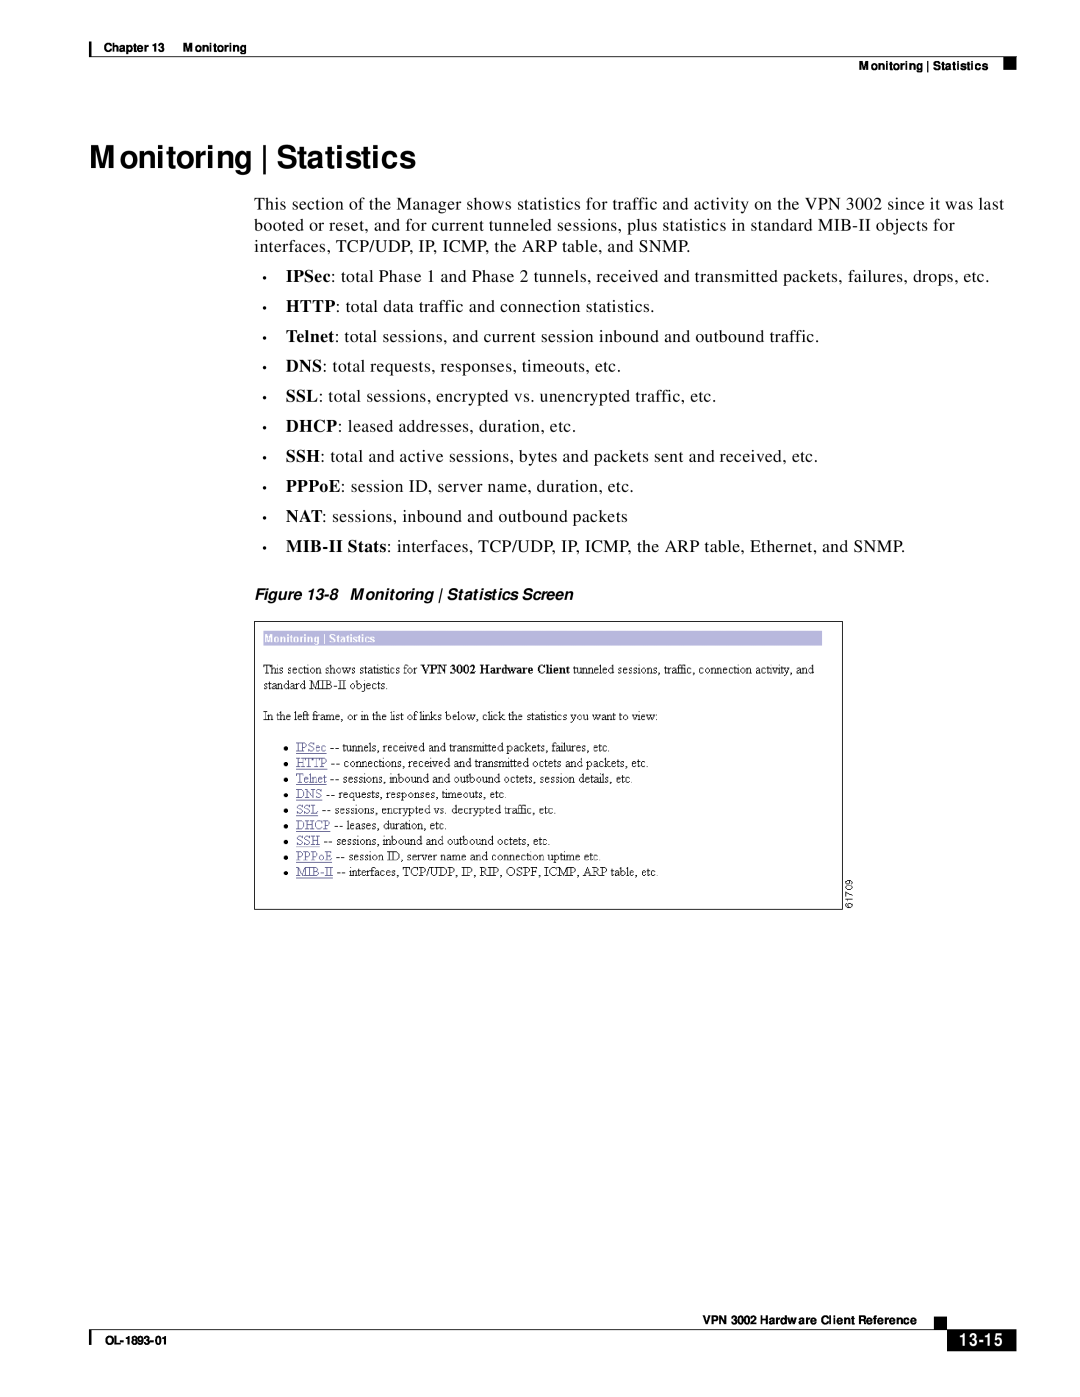 Cisco Systems VPN 3002 manual Monitoring | Statistics, 13-15 